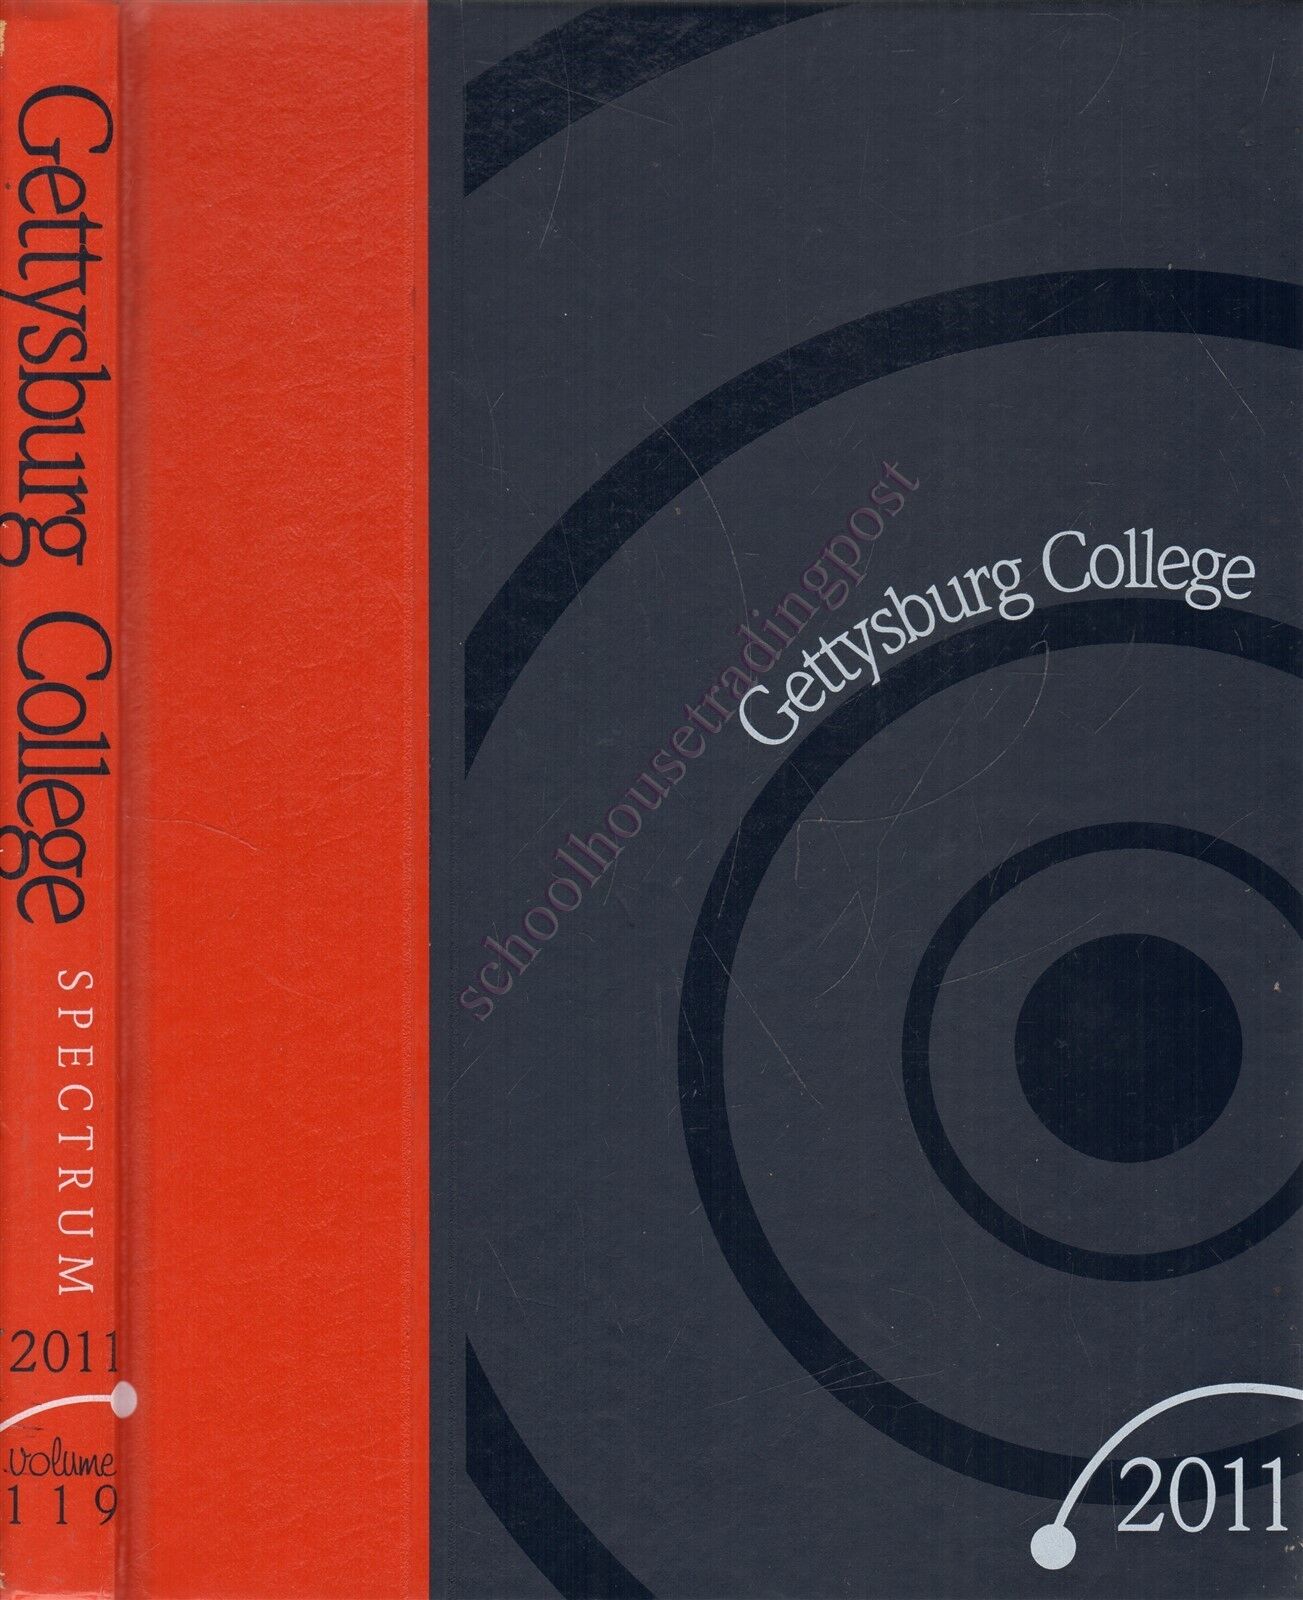 College Yearbook Gettysburg College Gettysburg Pennsylvania PA Spectrum 2011